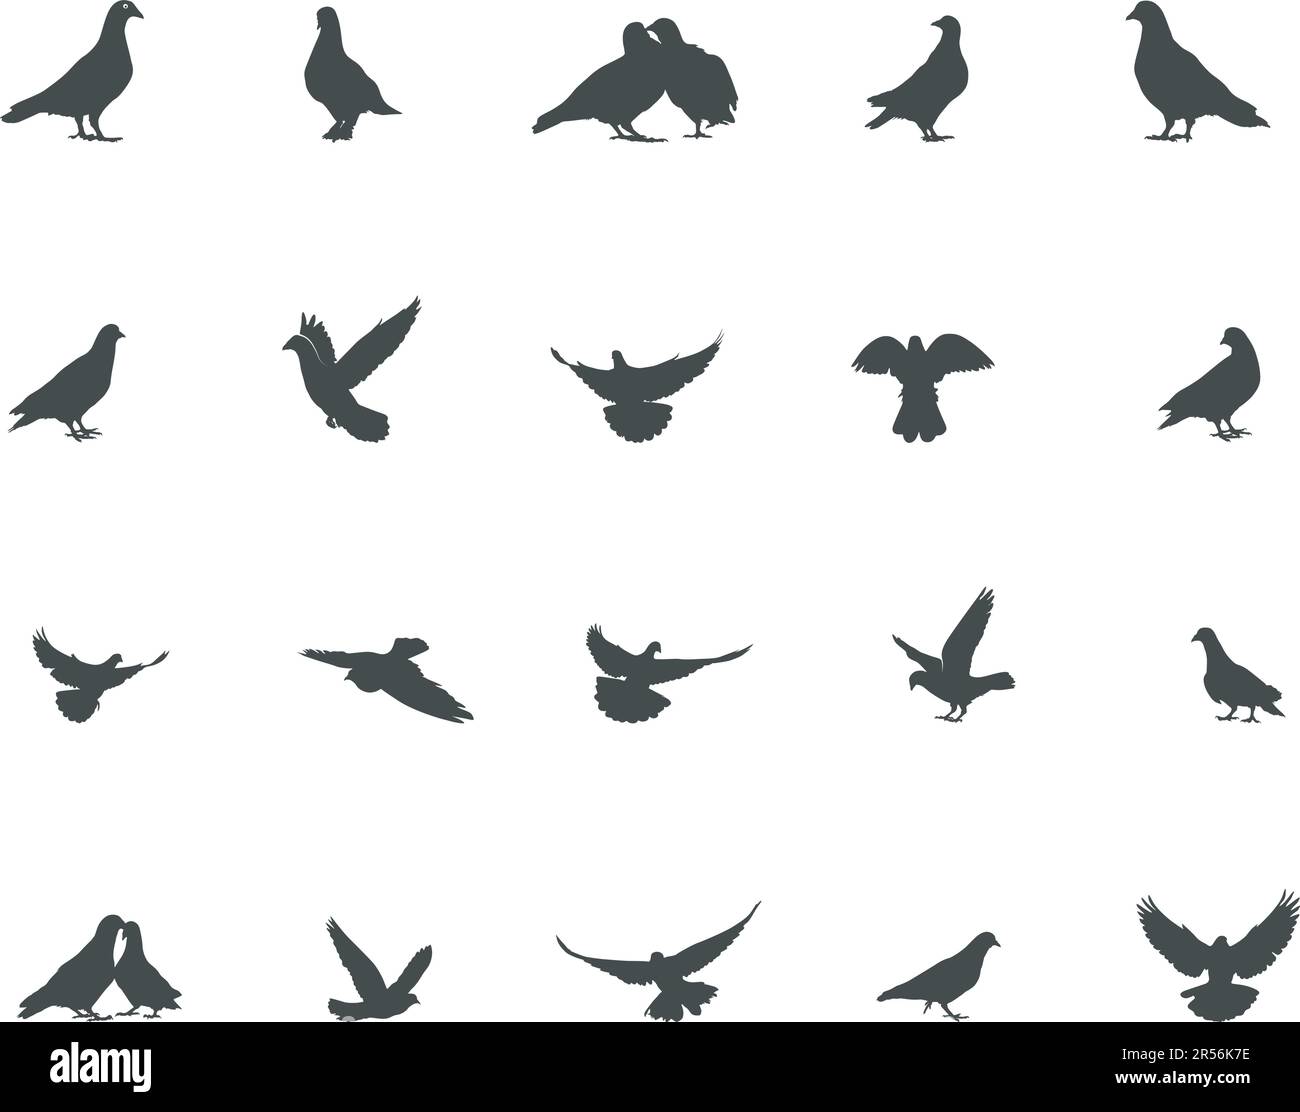 Pigeon silhouette, Pigeon vector illustration, Pigeon bird silhouette Stock Vector